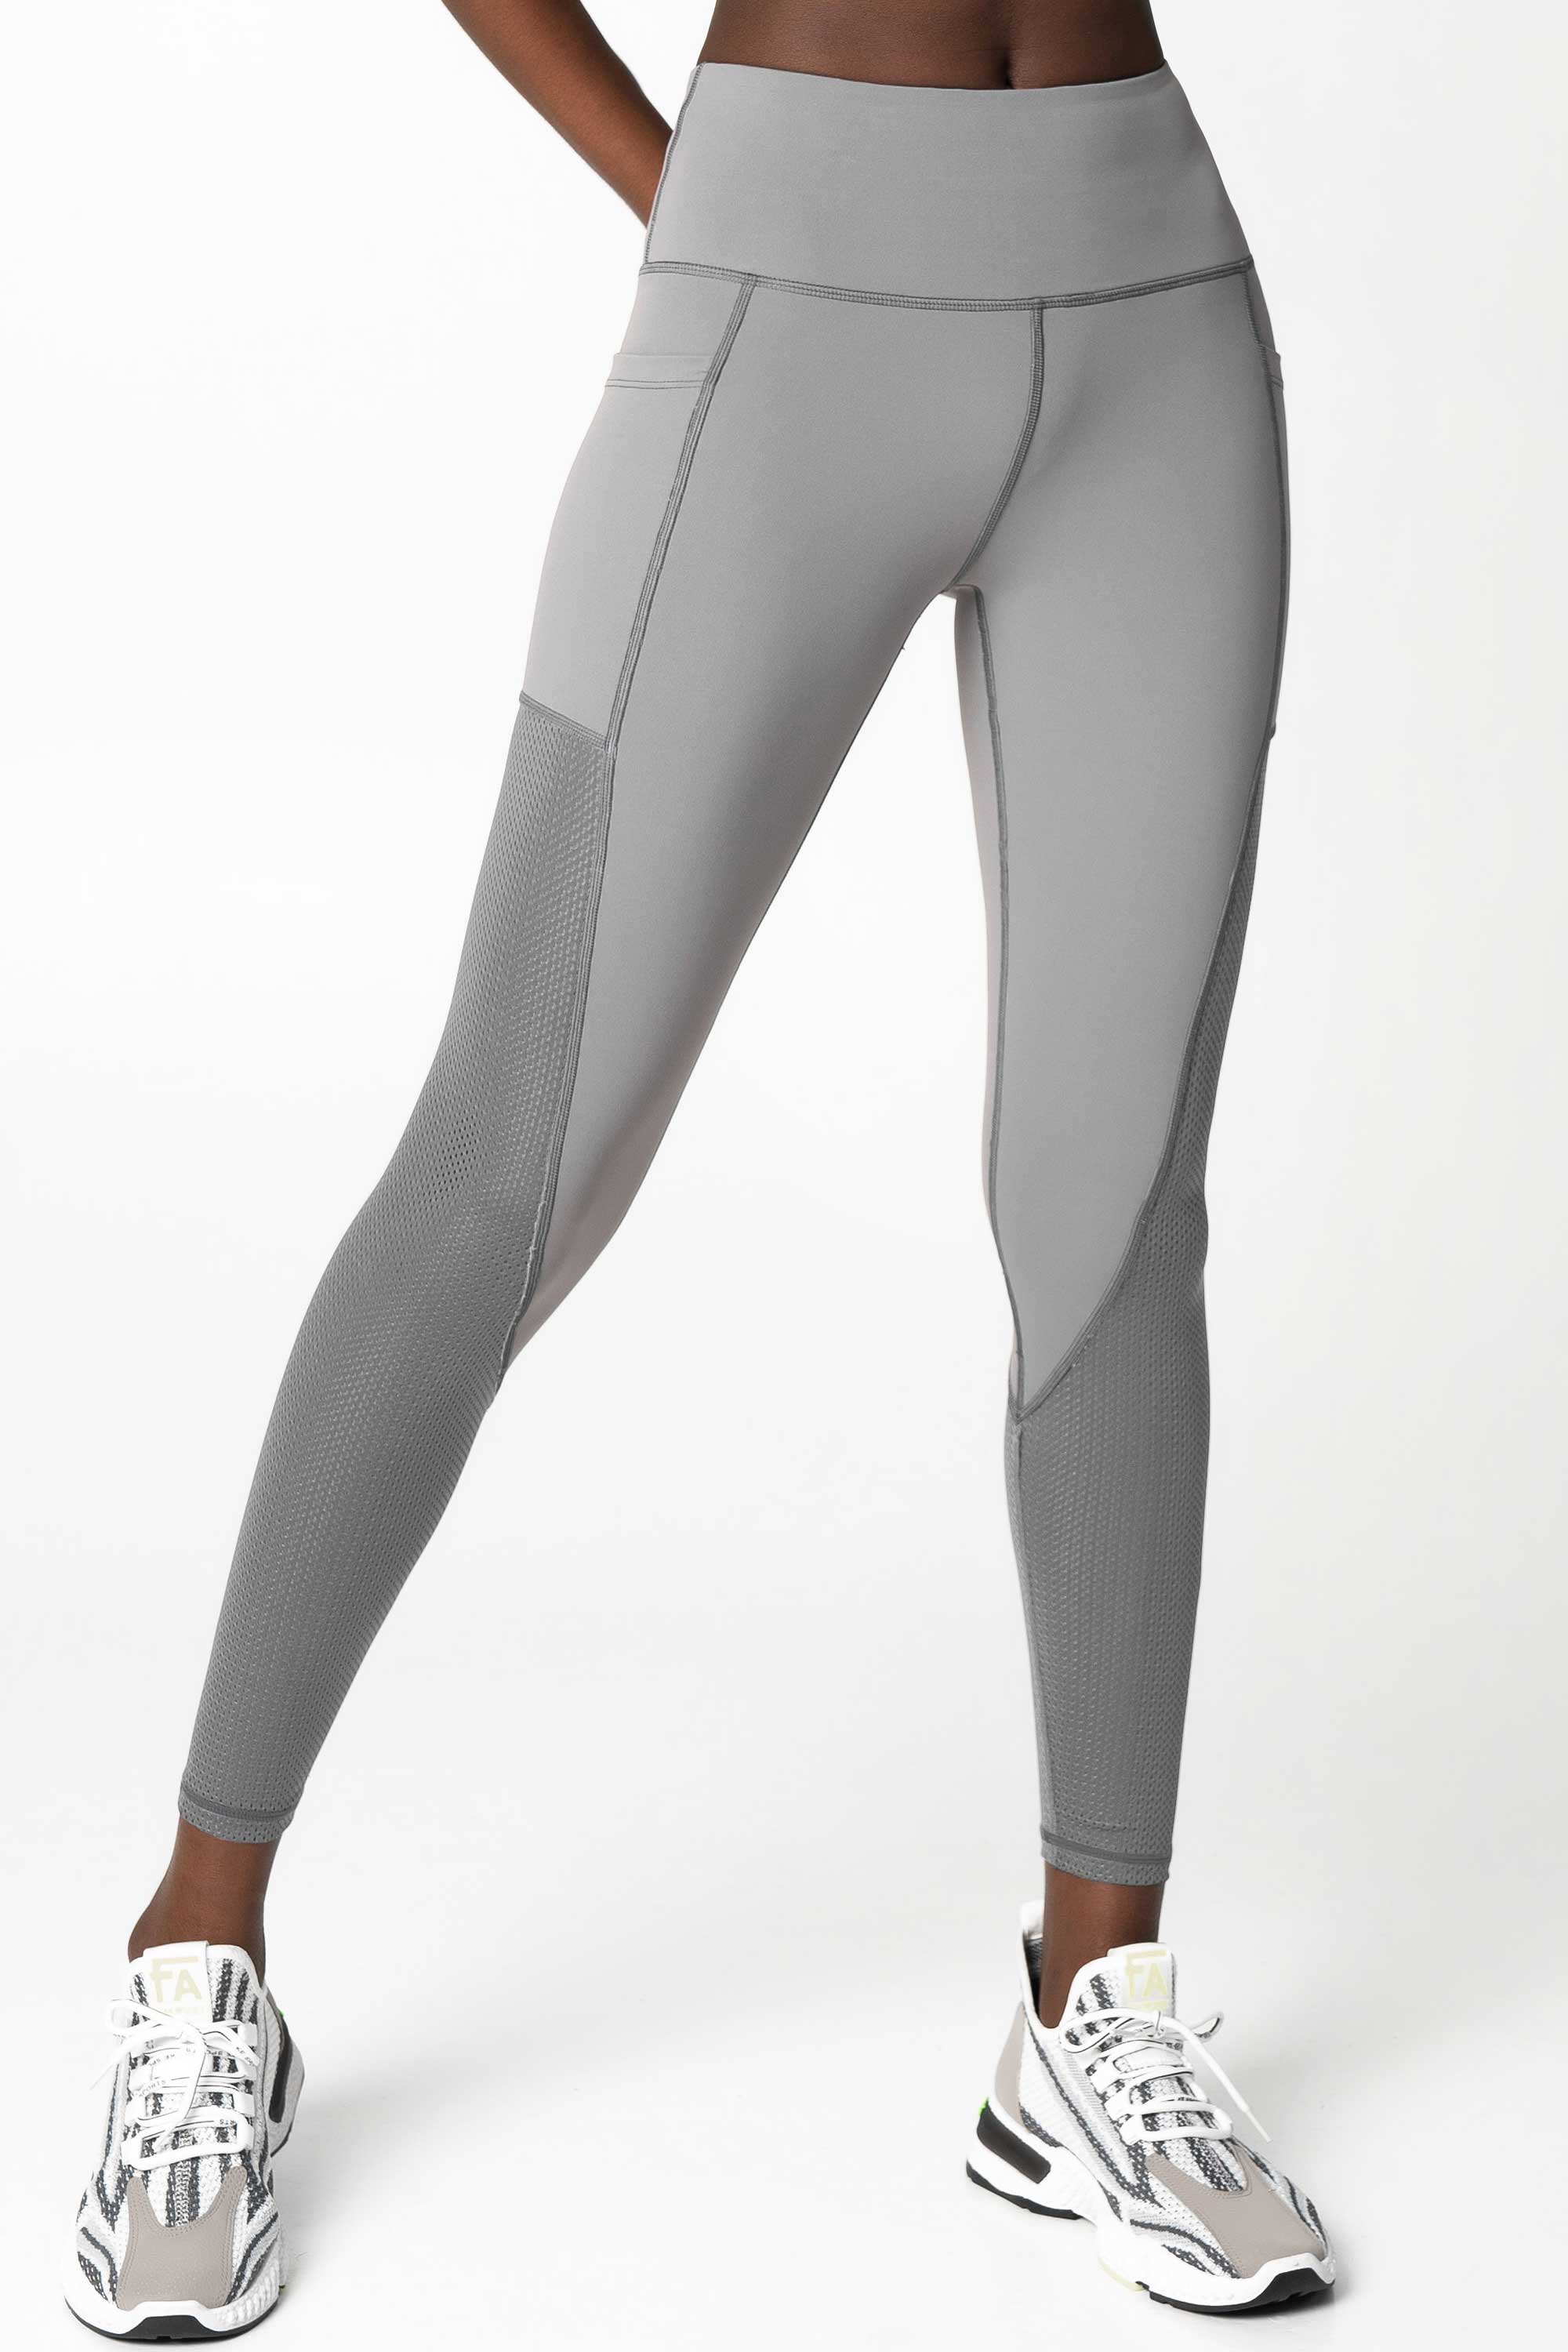 Silver Grey Cassi Mesh & Pockets Workout Leggings Yoga Pants - Women